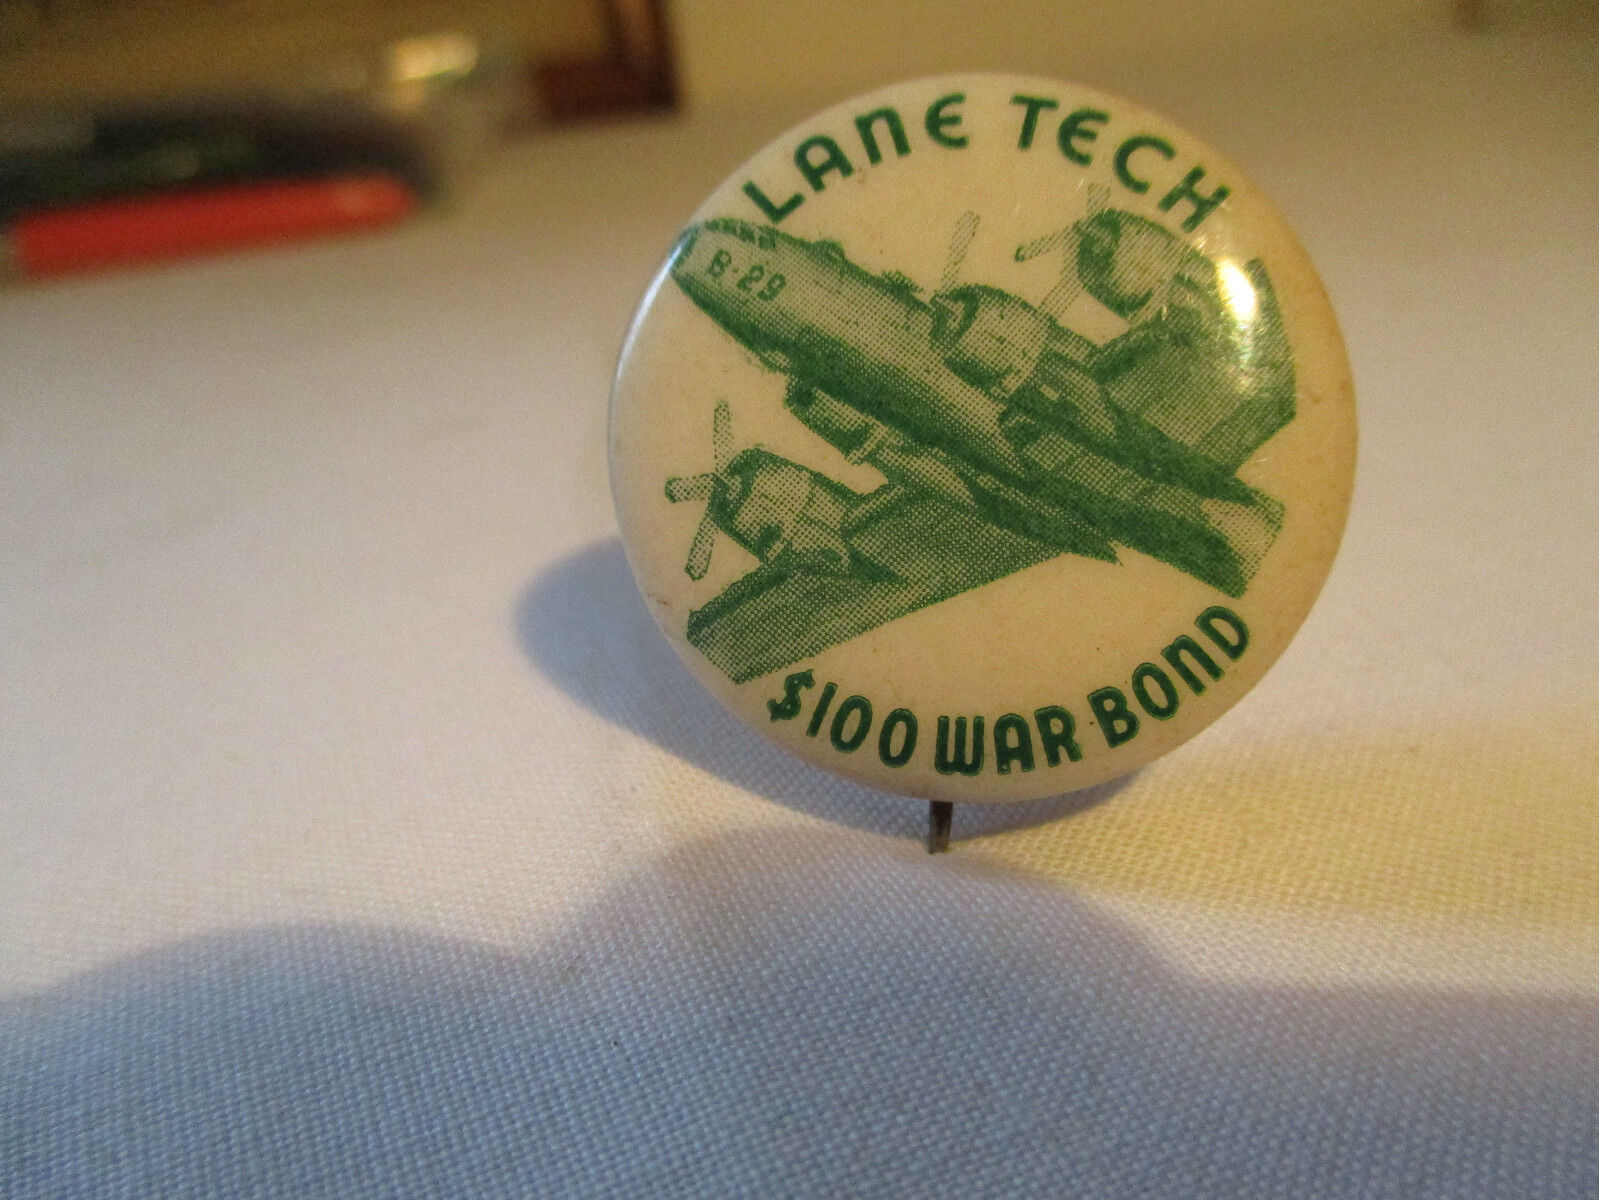  WWII $100 WAR BOND PINBACK W/ B29 SUPER FORTRESS BOMBER FROM LANE TECH CHICAGO